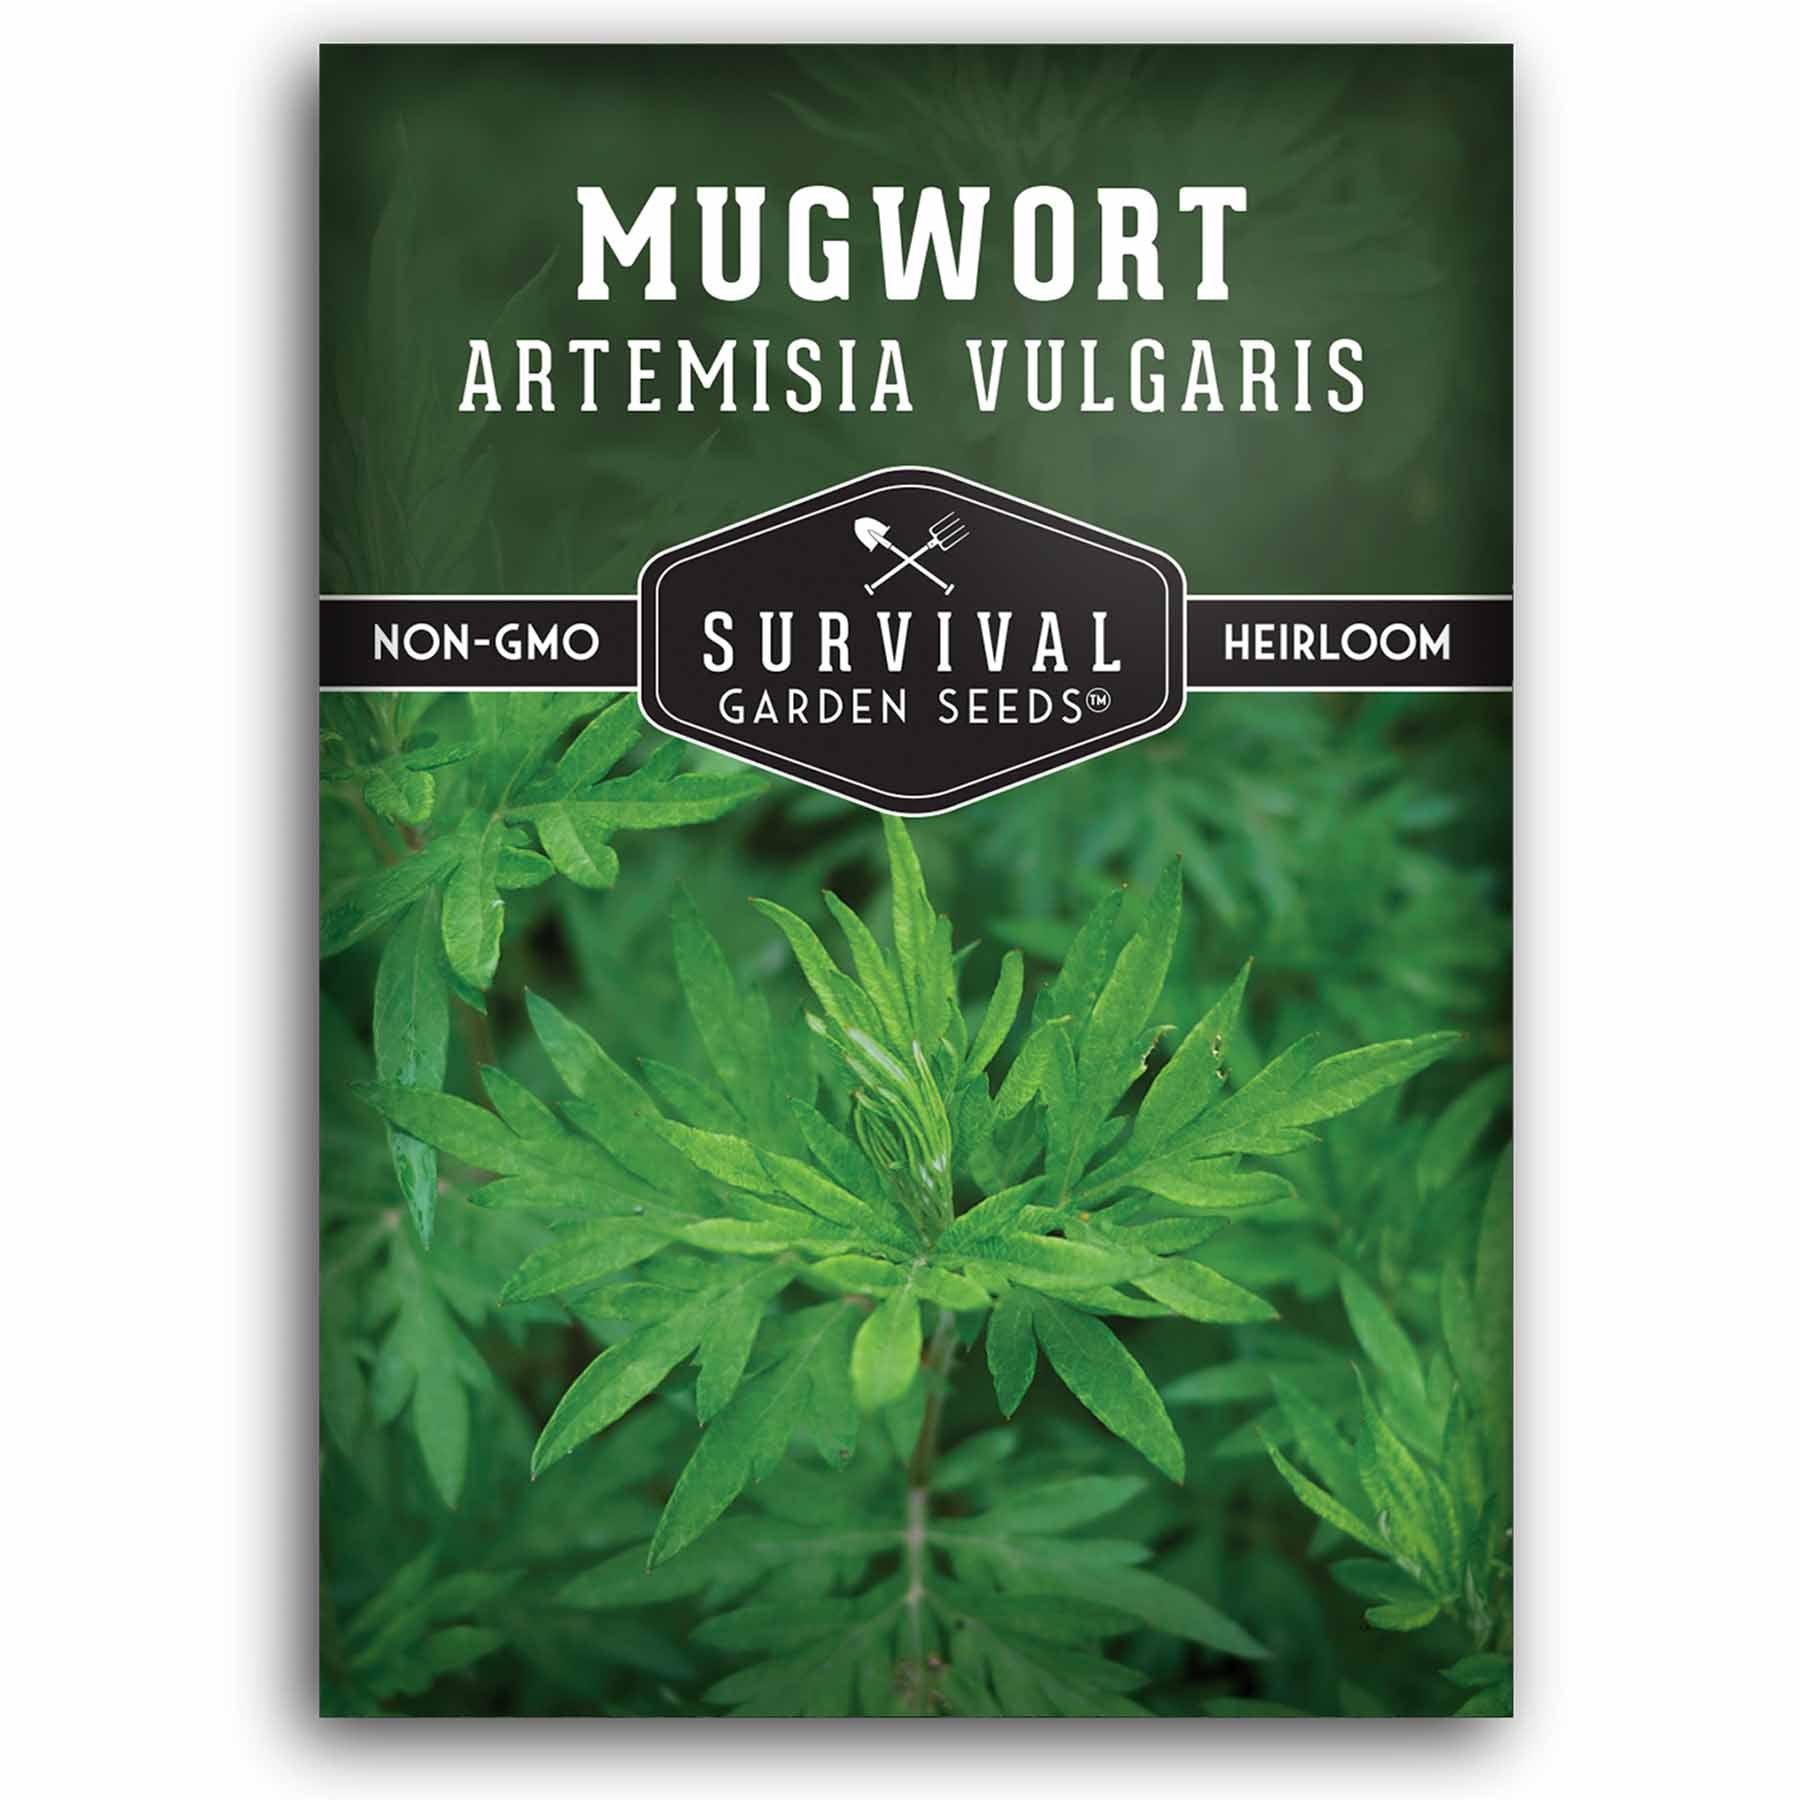 1 packet of Mugwort seeds